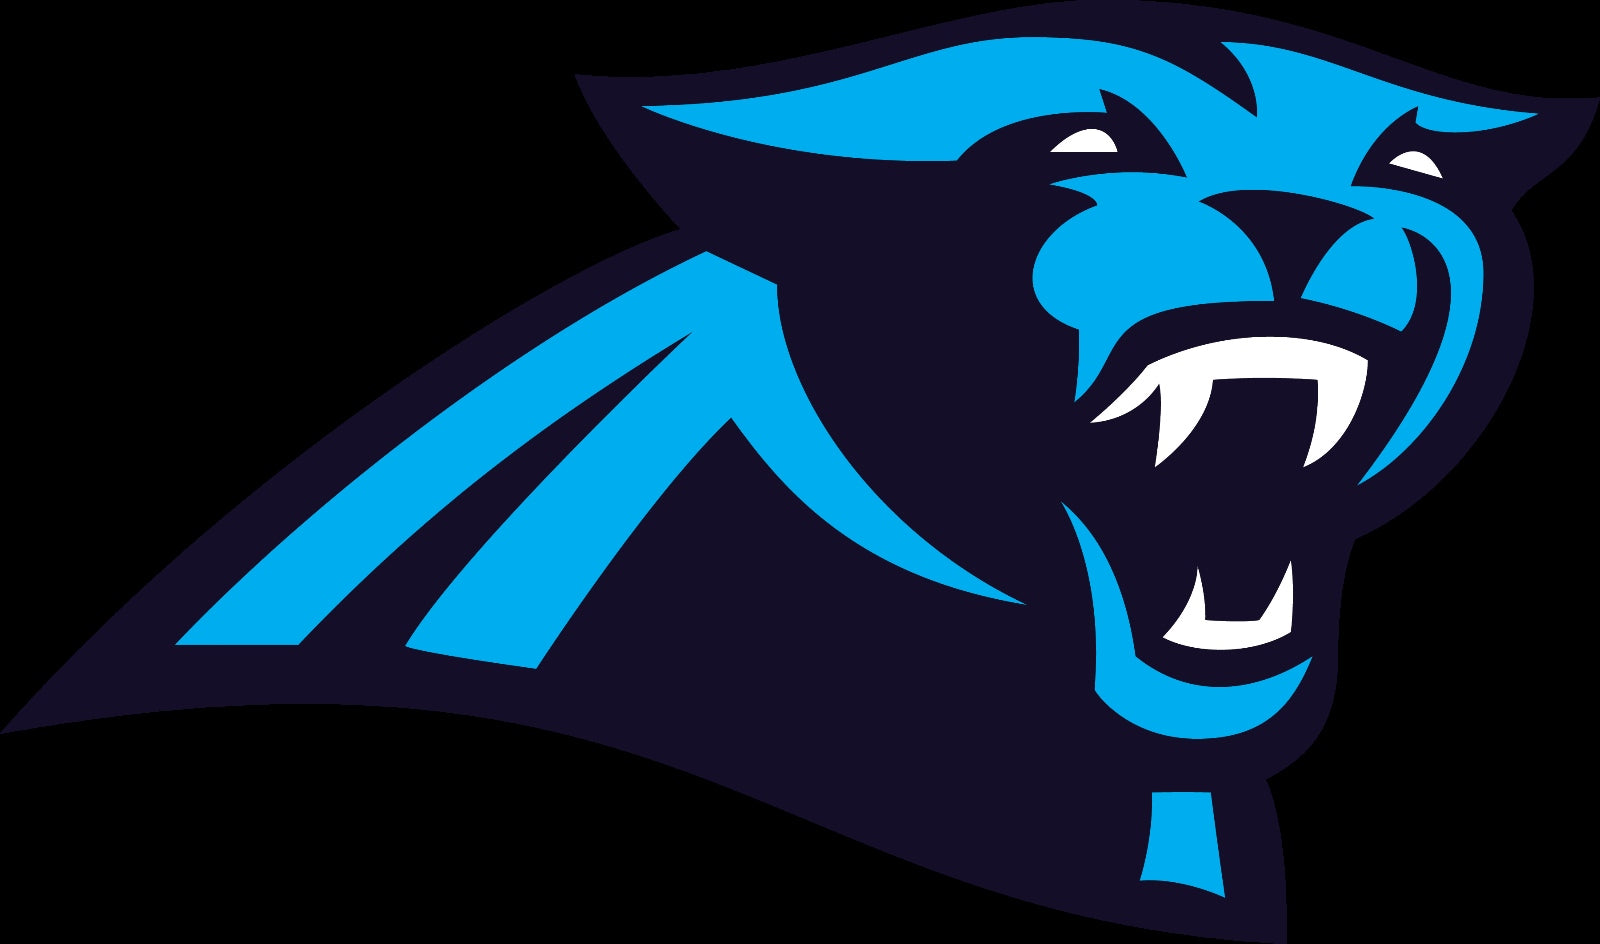 Carolina Panthers Alternate Future logo Vinyl Decal / Sticker 5